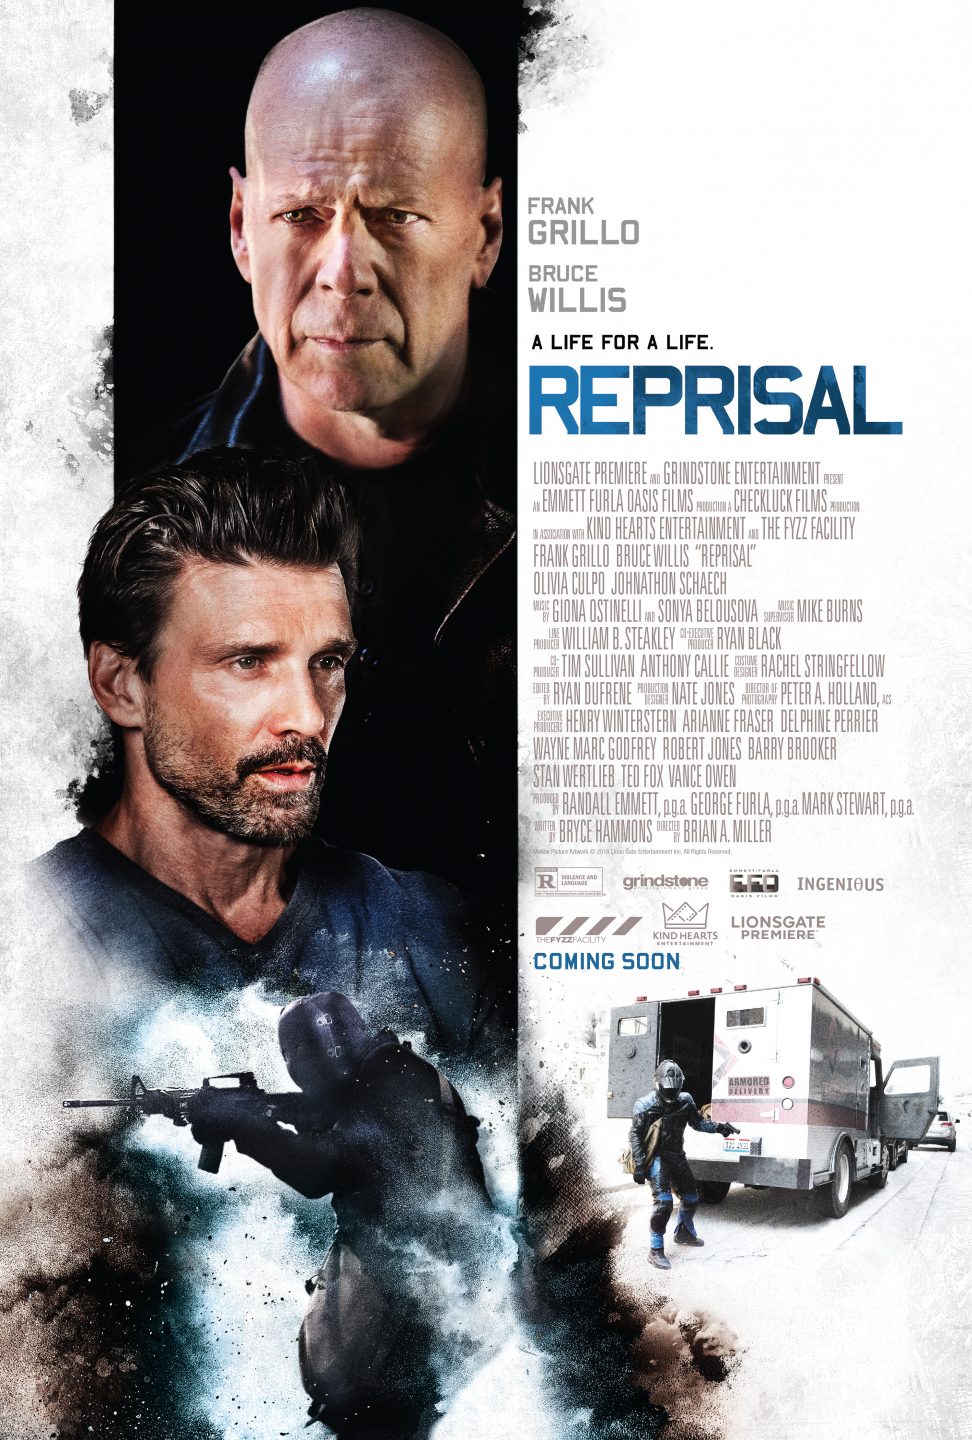 Reprisal poster (Lionsgate Premiere)